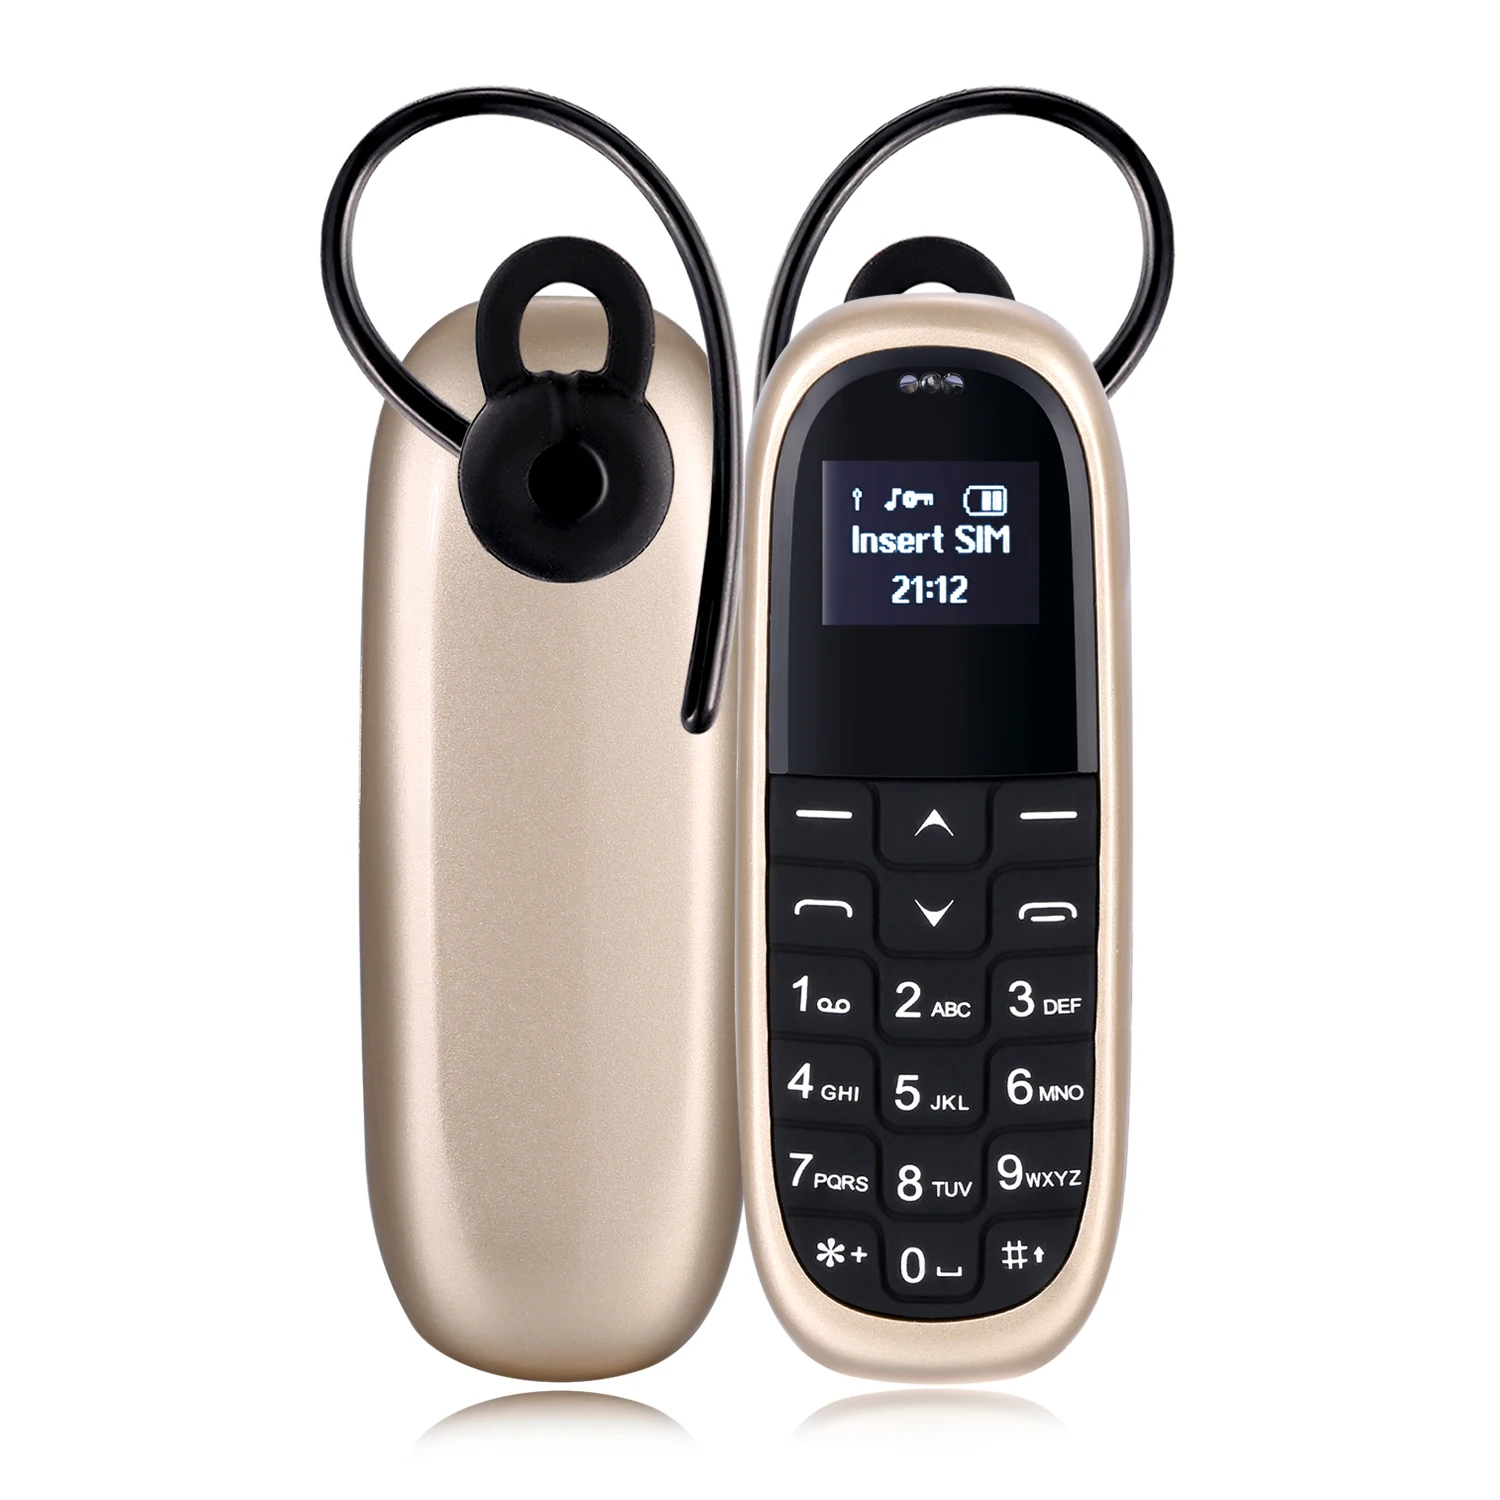 gift aeku kk1 mini pocket replace celular russianenglish keyboard low radiation bluetooth dialer cell phone pk bm50 bm70 free global shipping